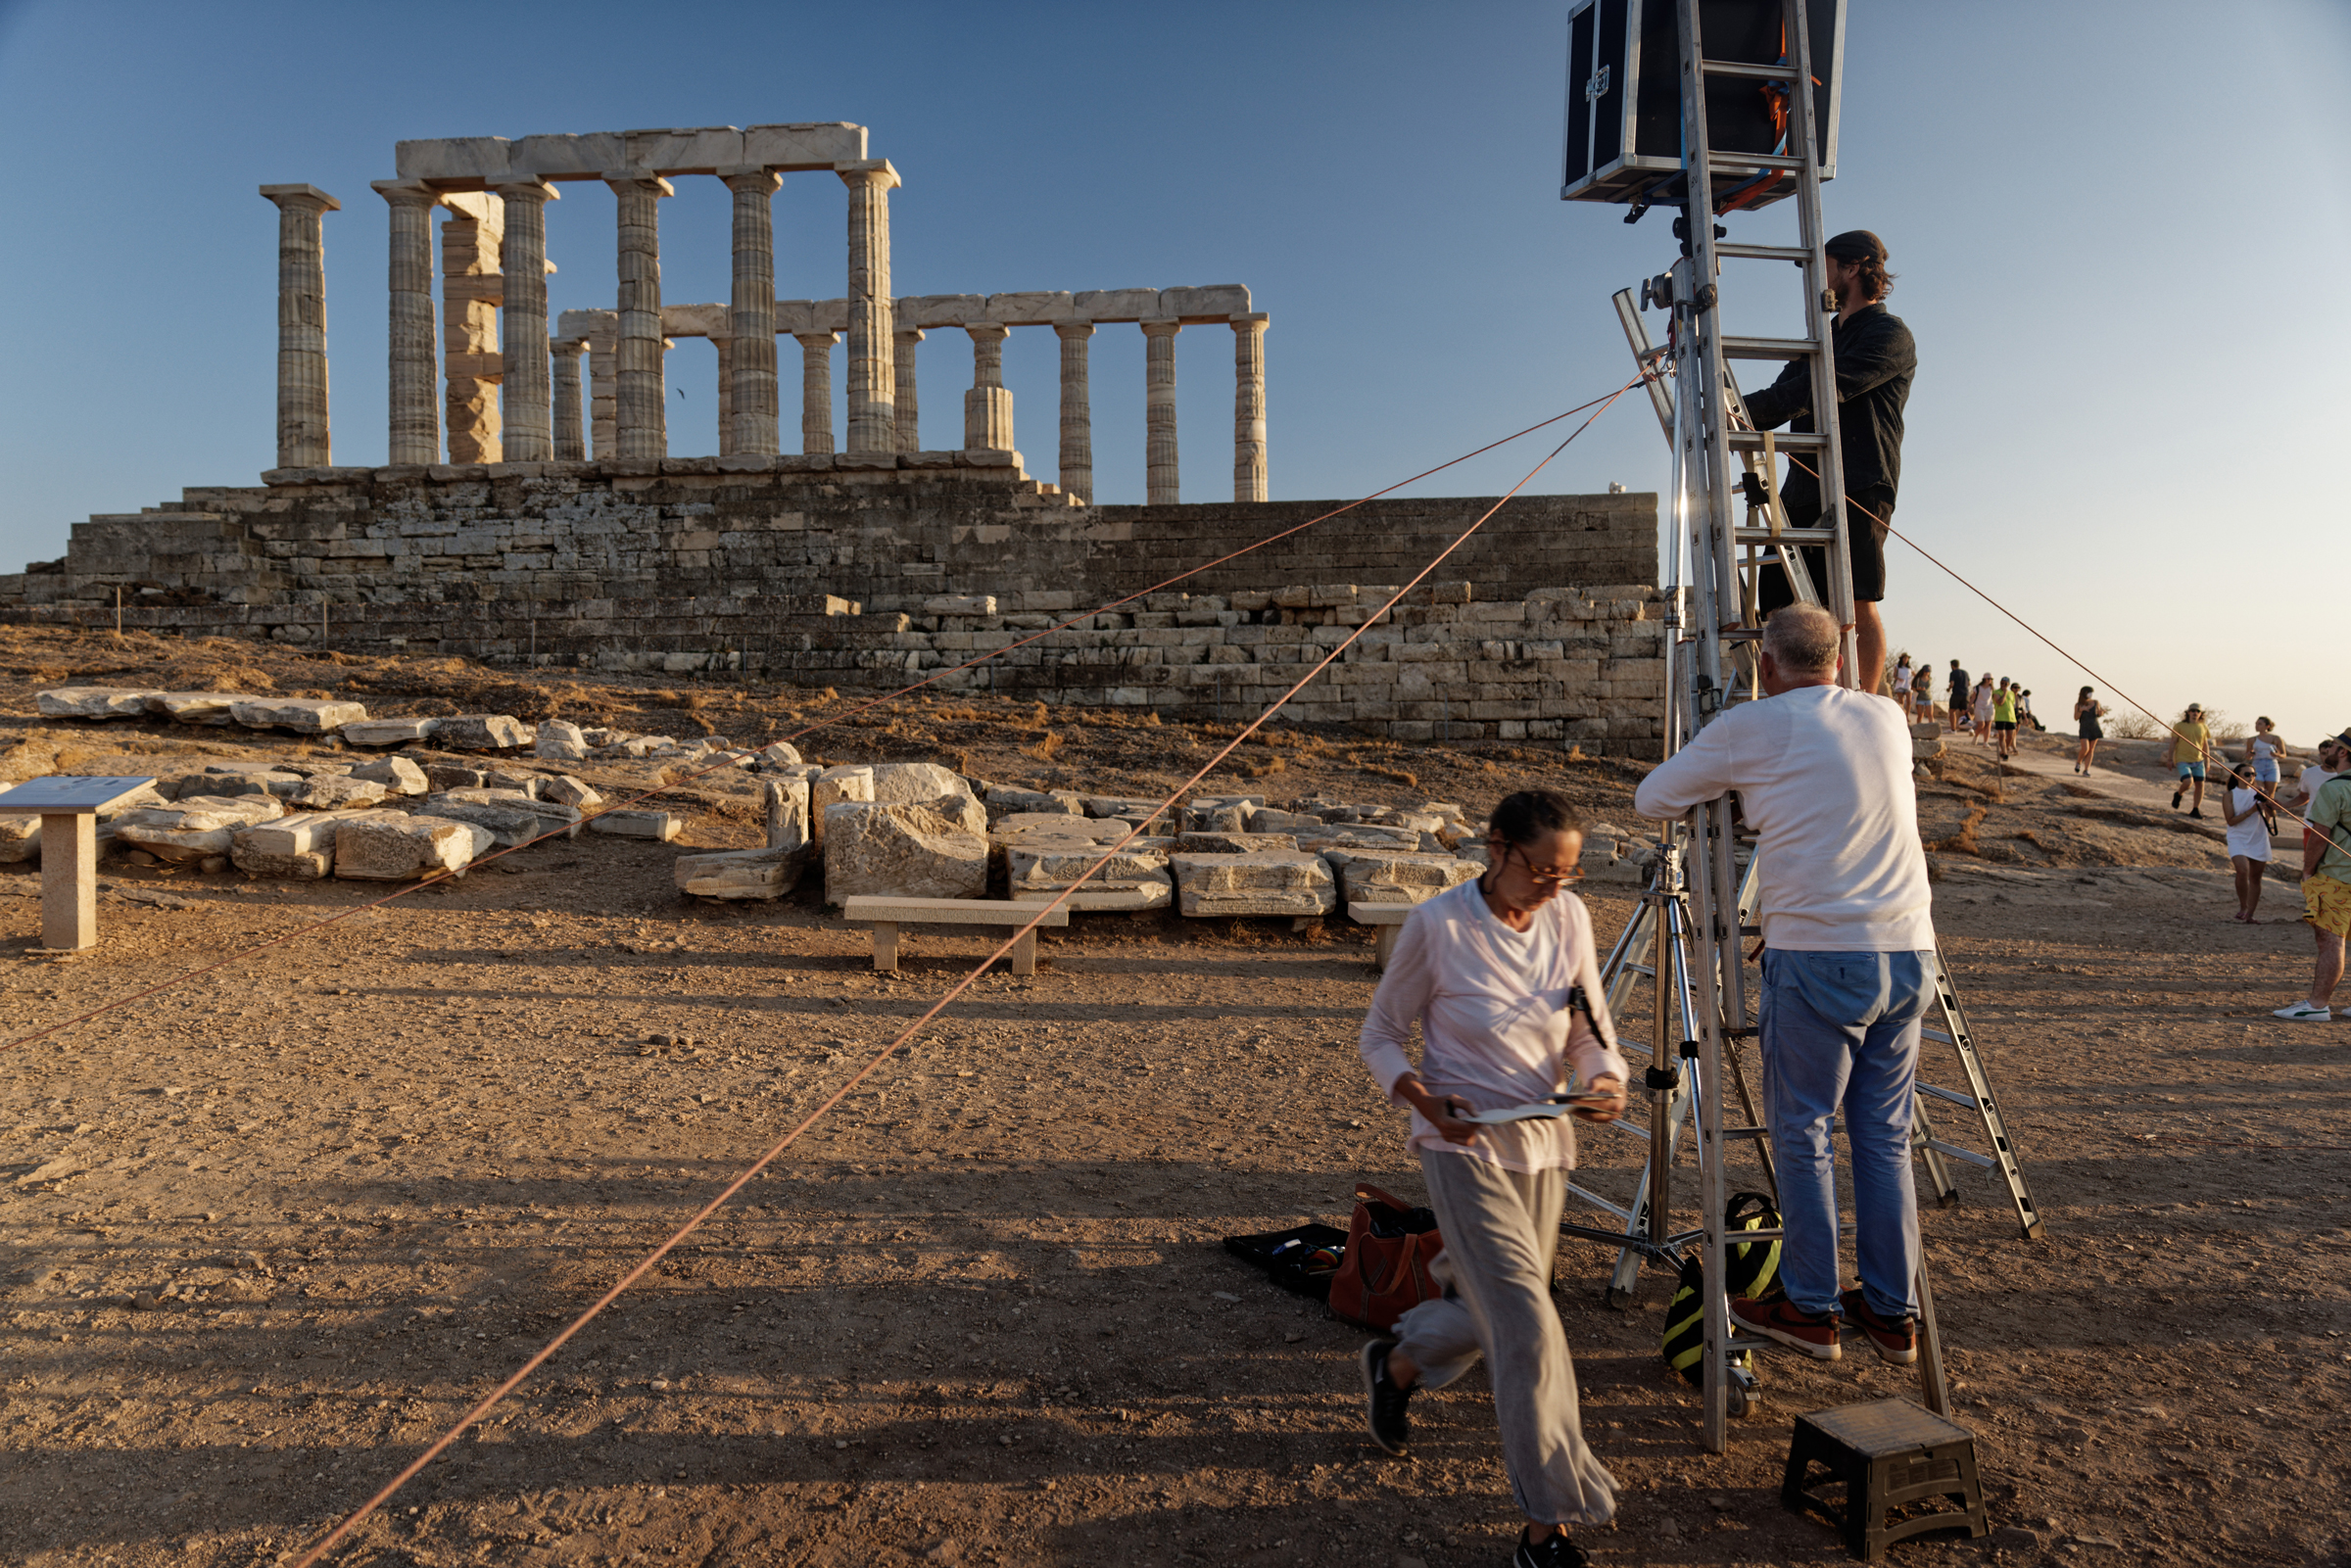 Vera Lutter Project Documentation – Greece